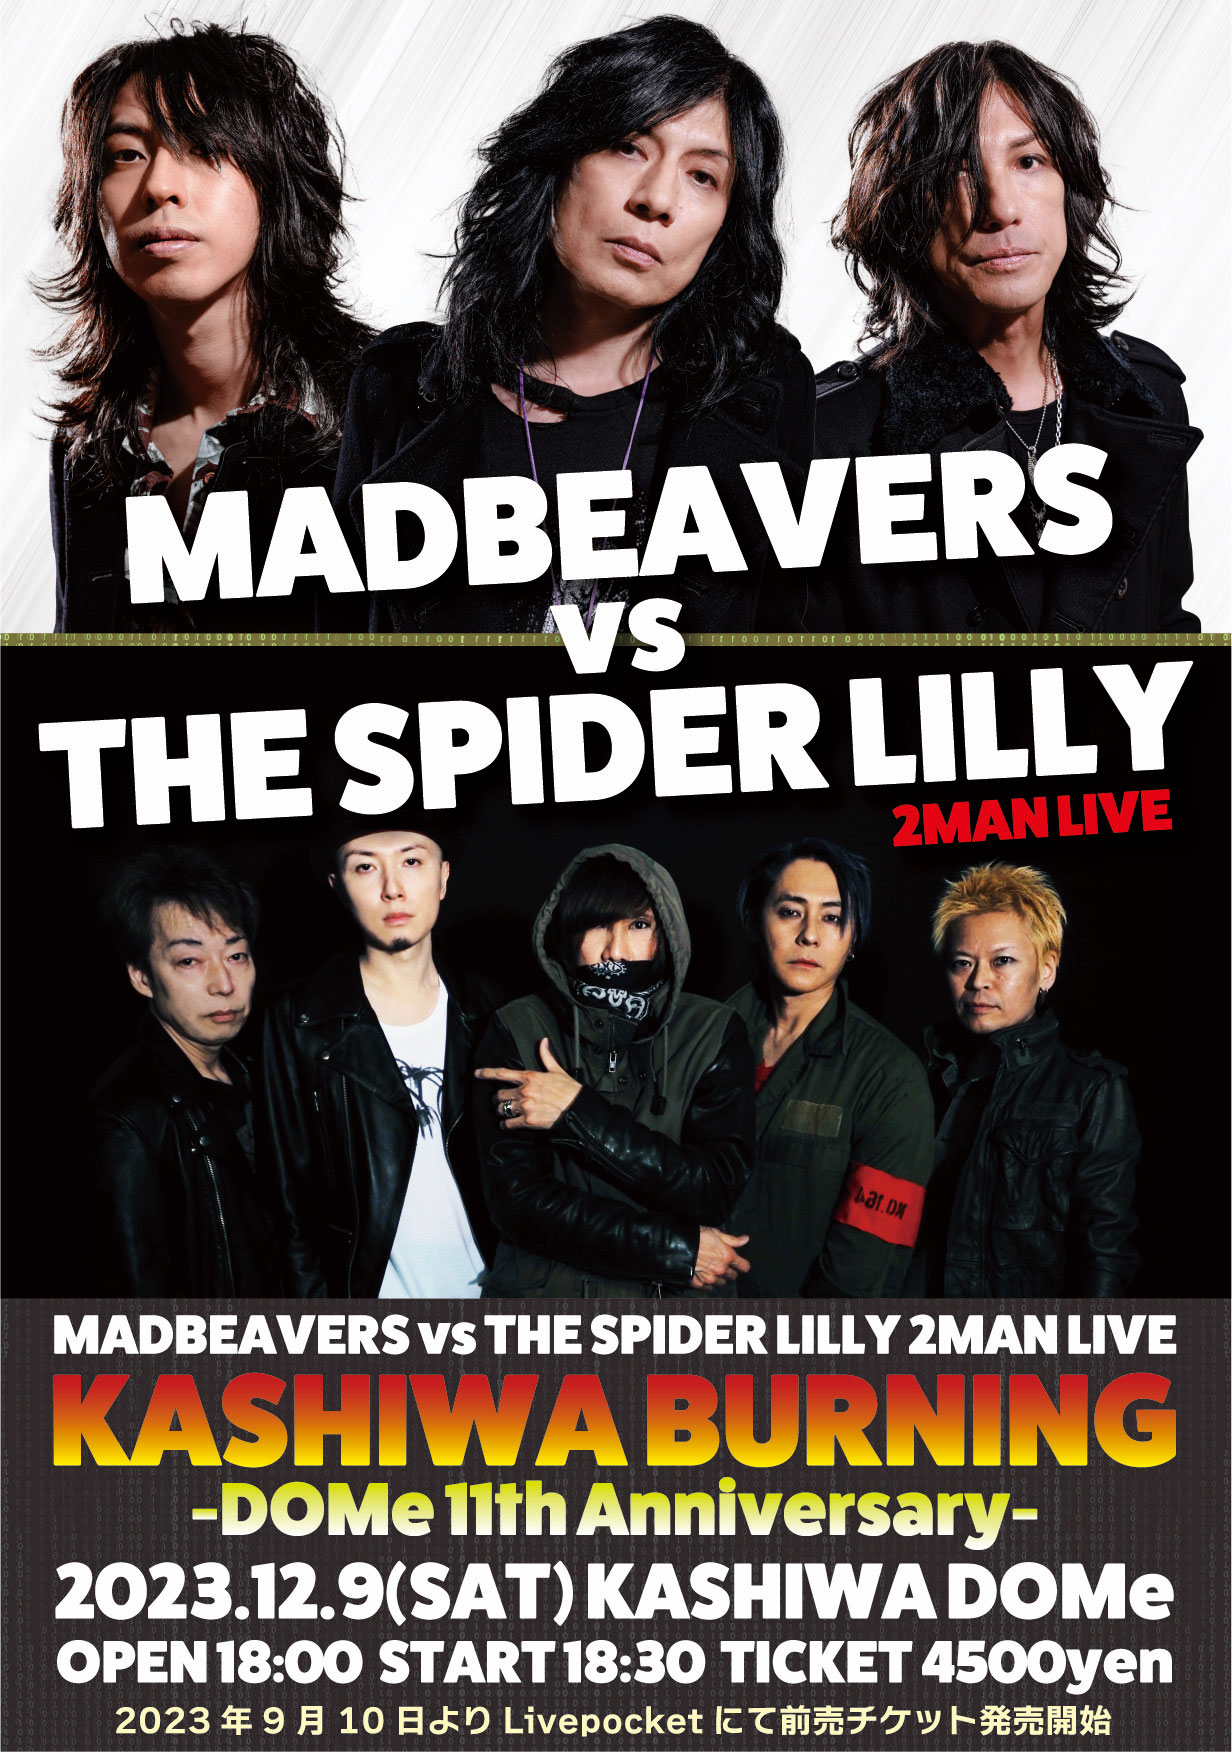 MADBEAVERS vs THE SPIDER LILLY 2MAN LIVE "KASHIWA BURNING" -DOMe 11th Anniversary-